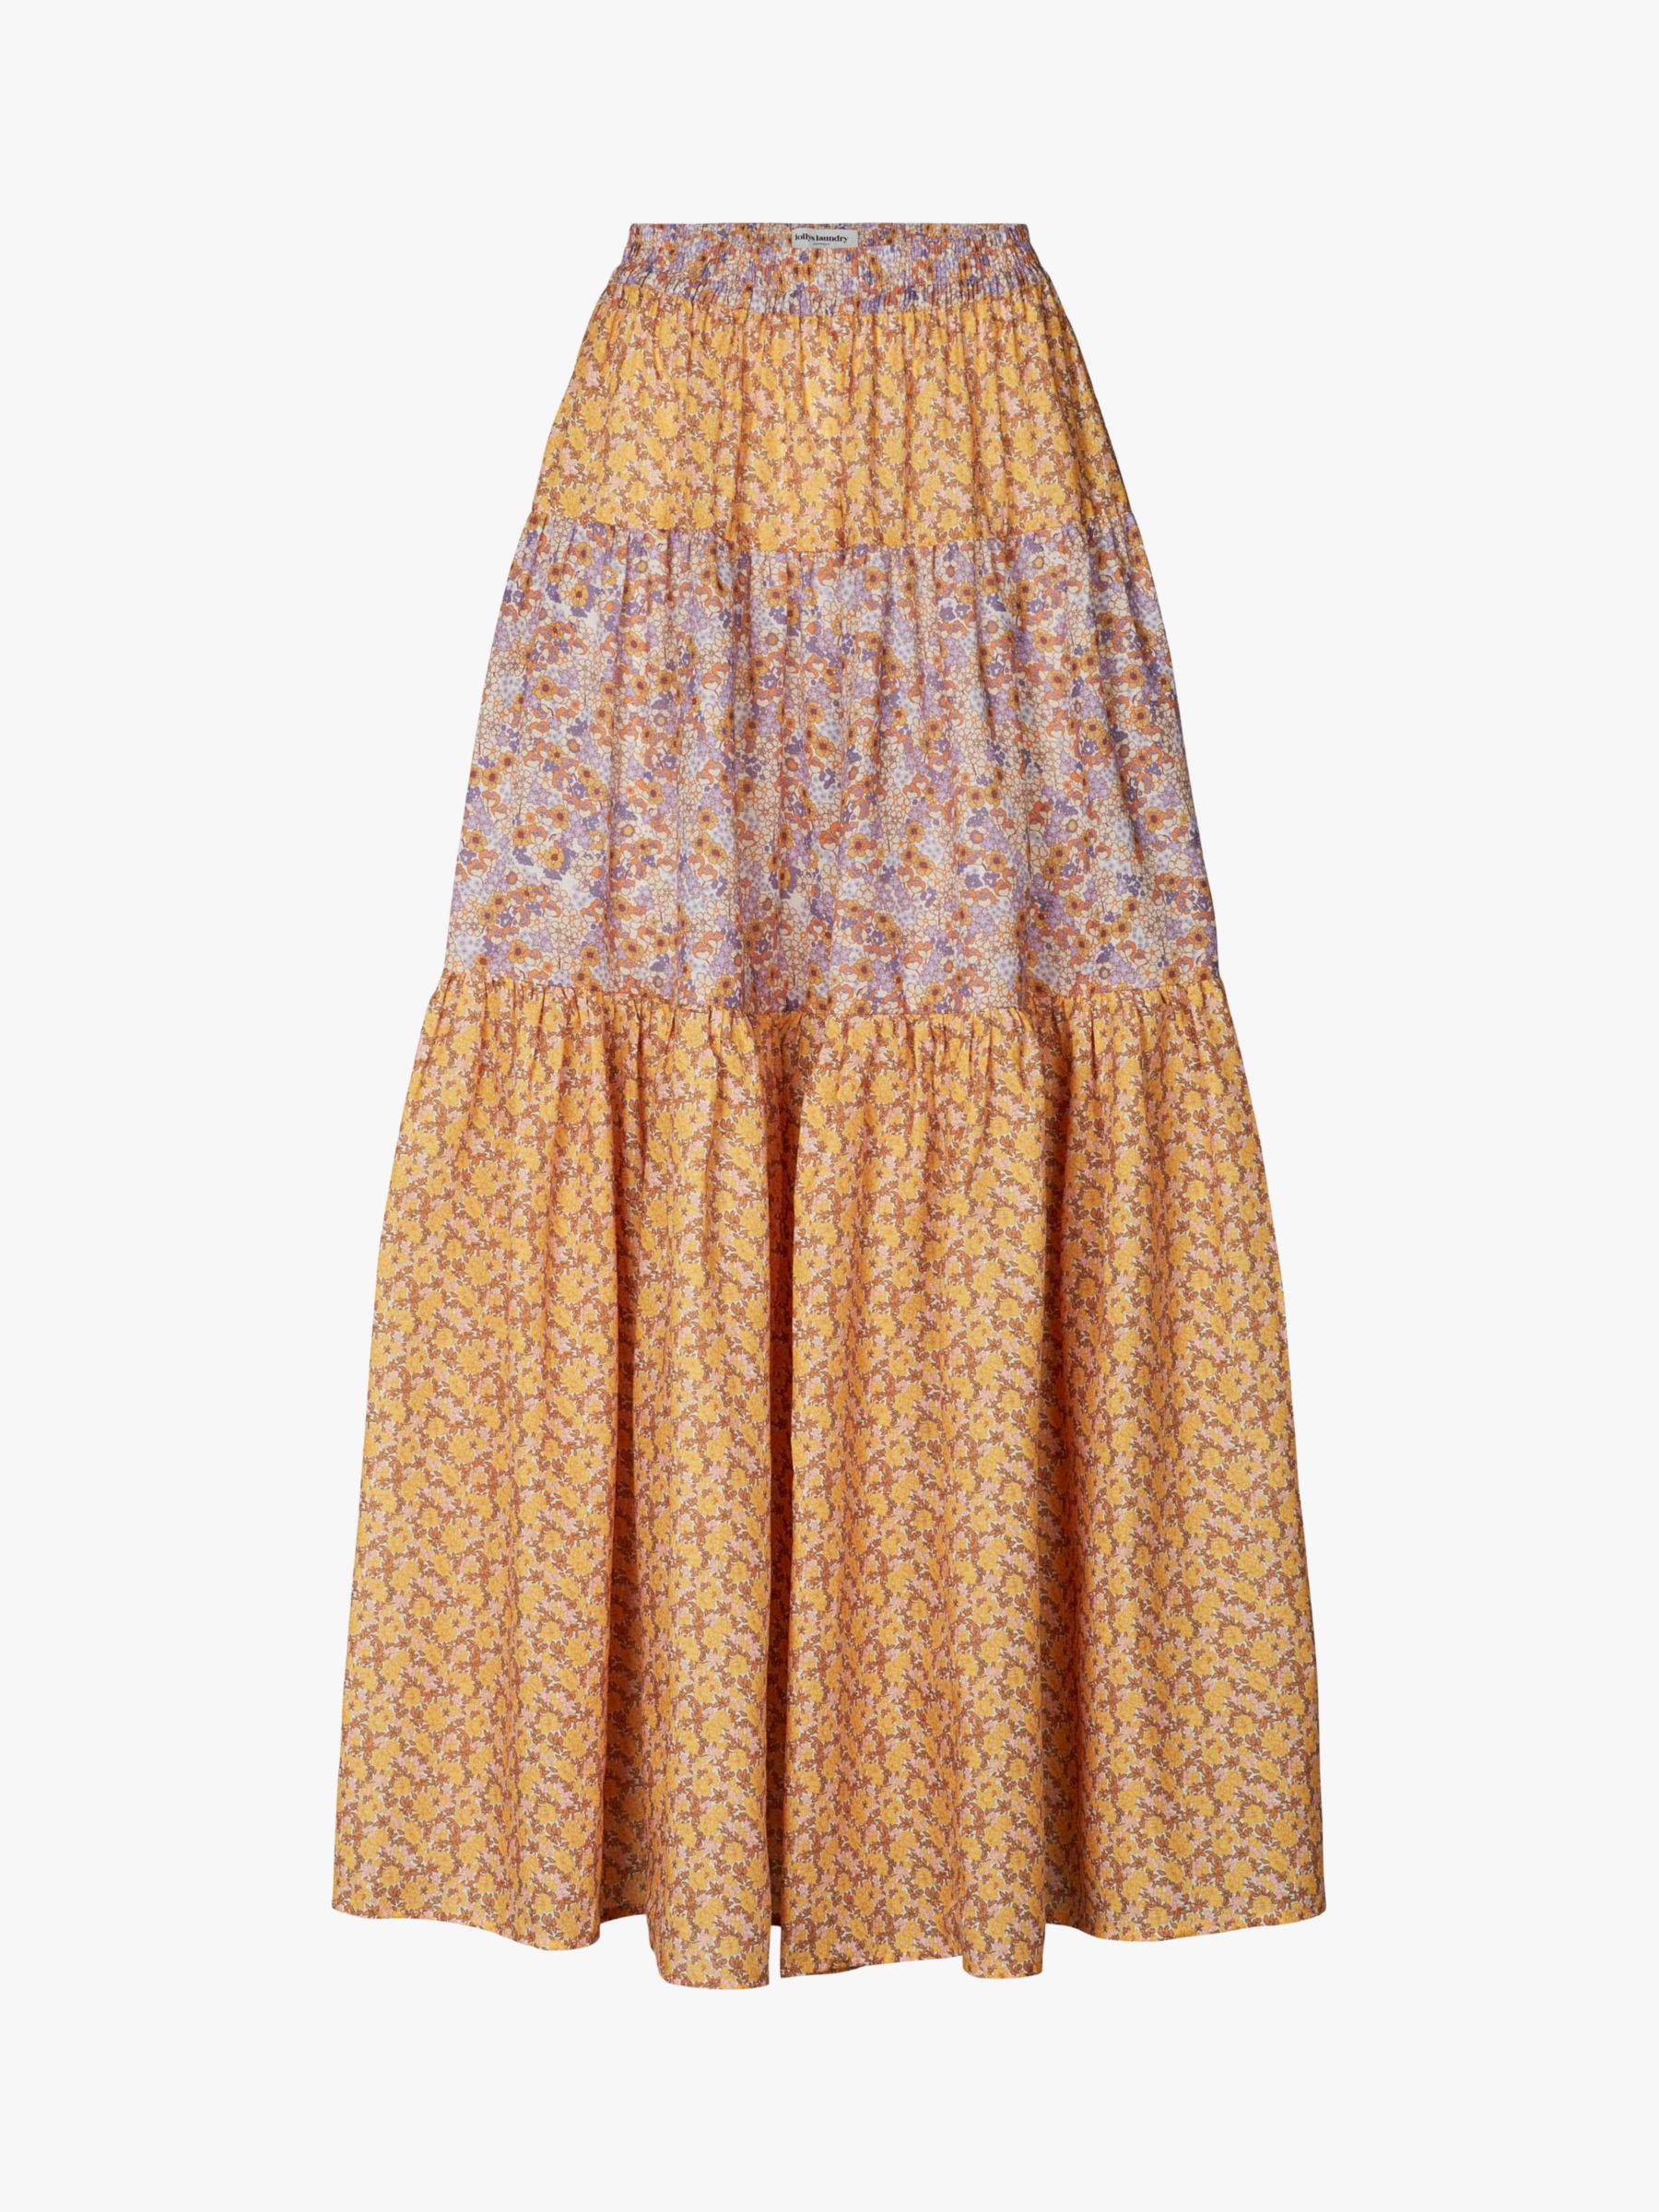 Lollys Laundry Sunset Floral Skirt, Multi at John Lewis & Partners